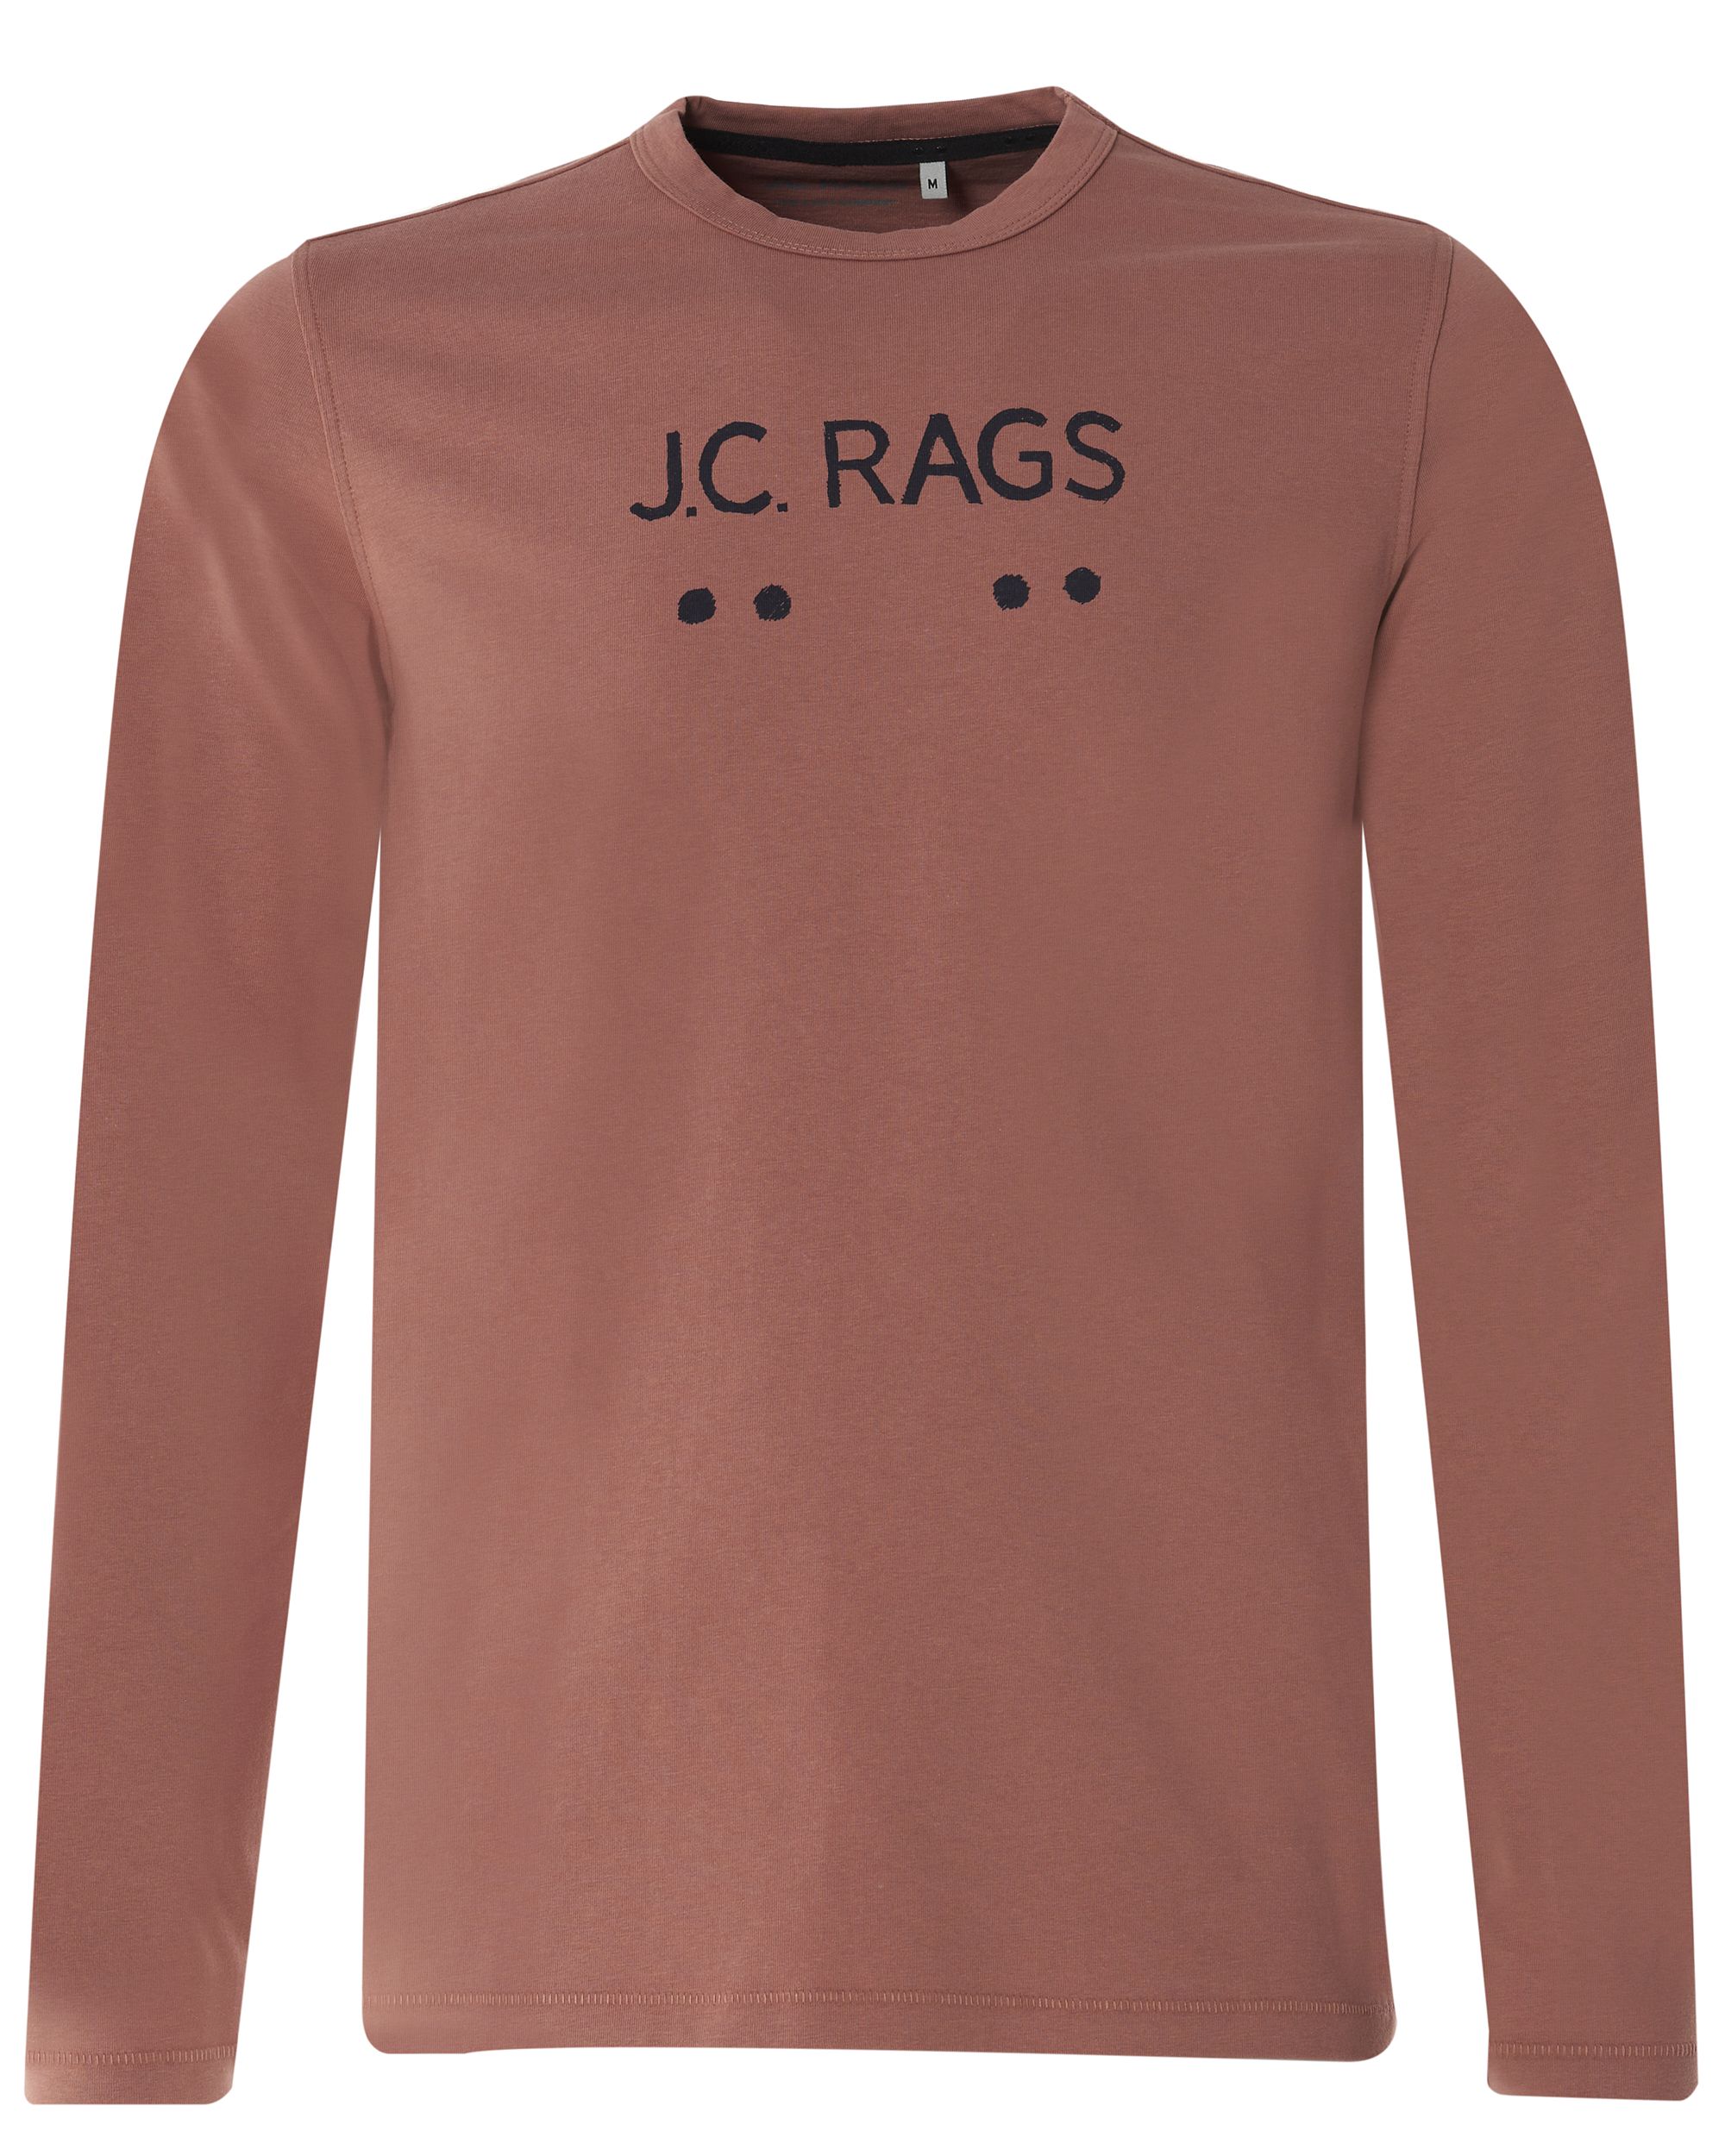 J.C. RAGS Renzo T-shirt LM Roze uni 076966-002-L